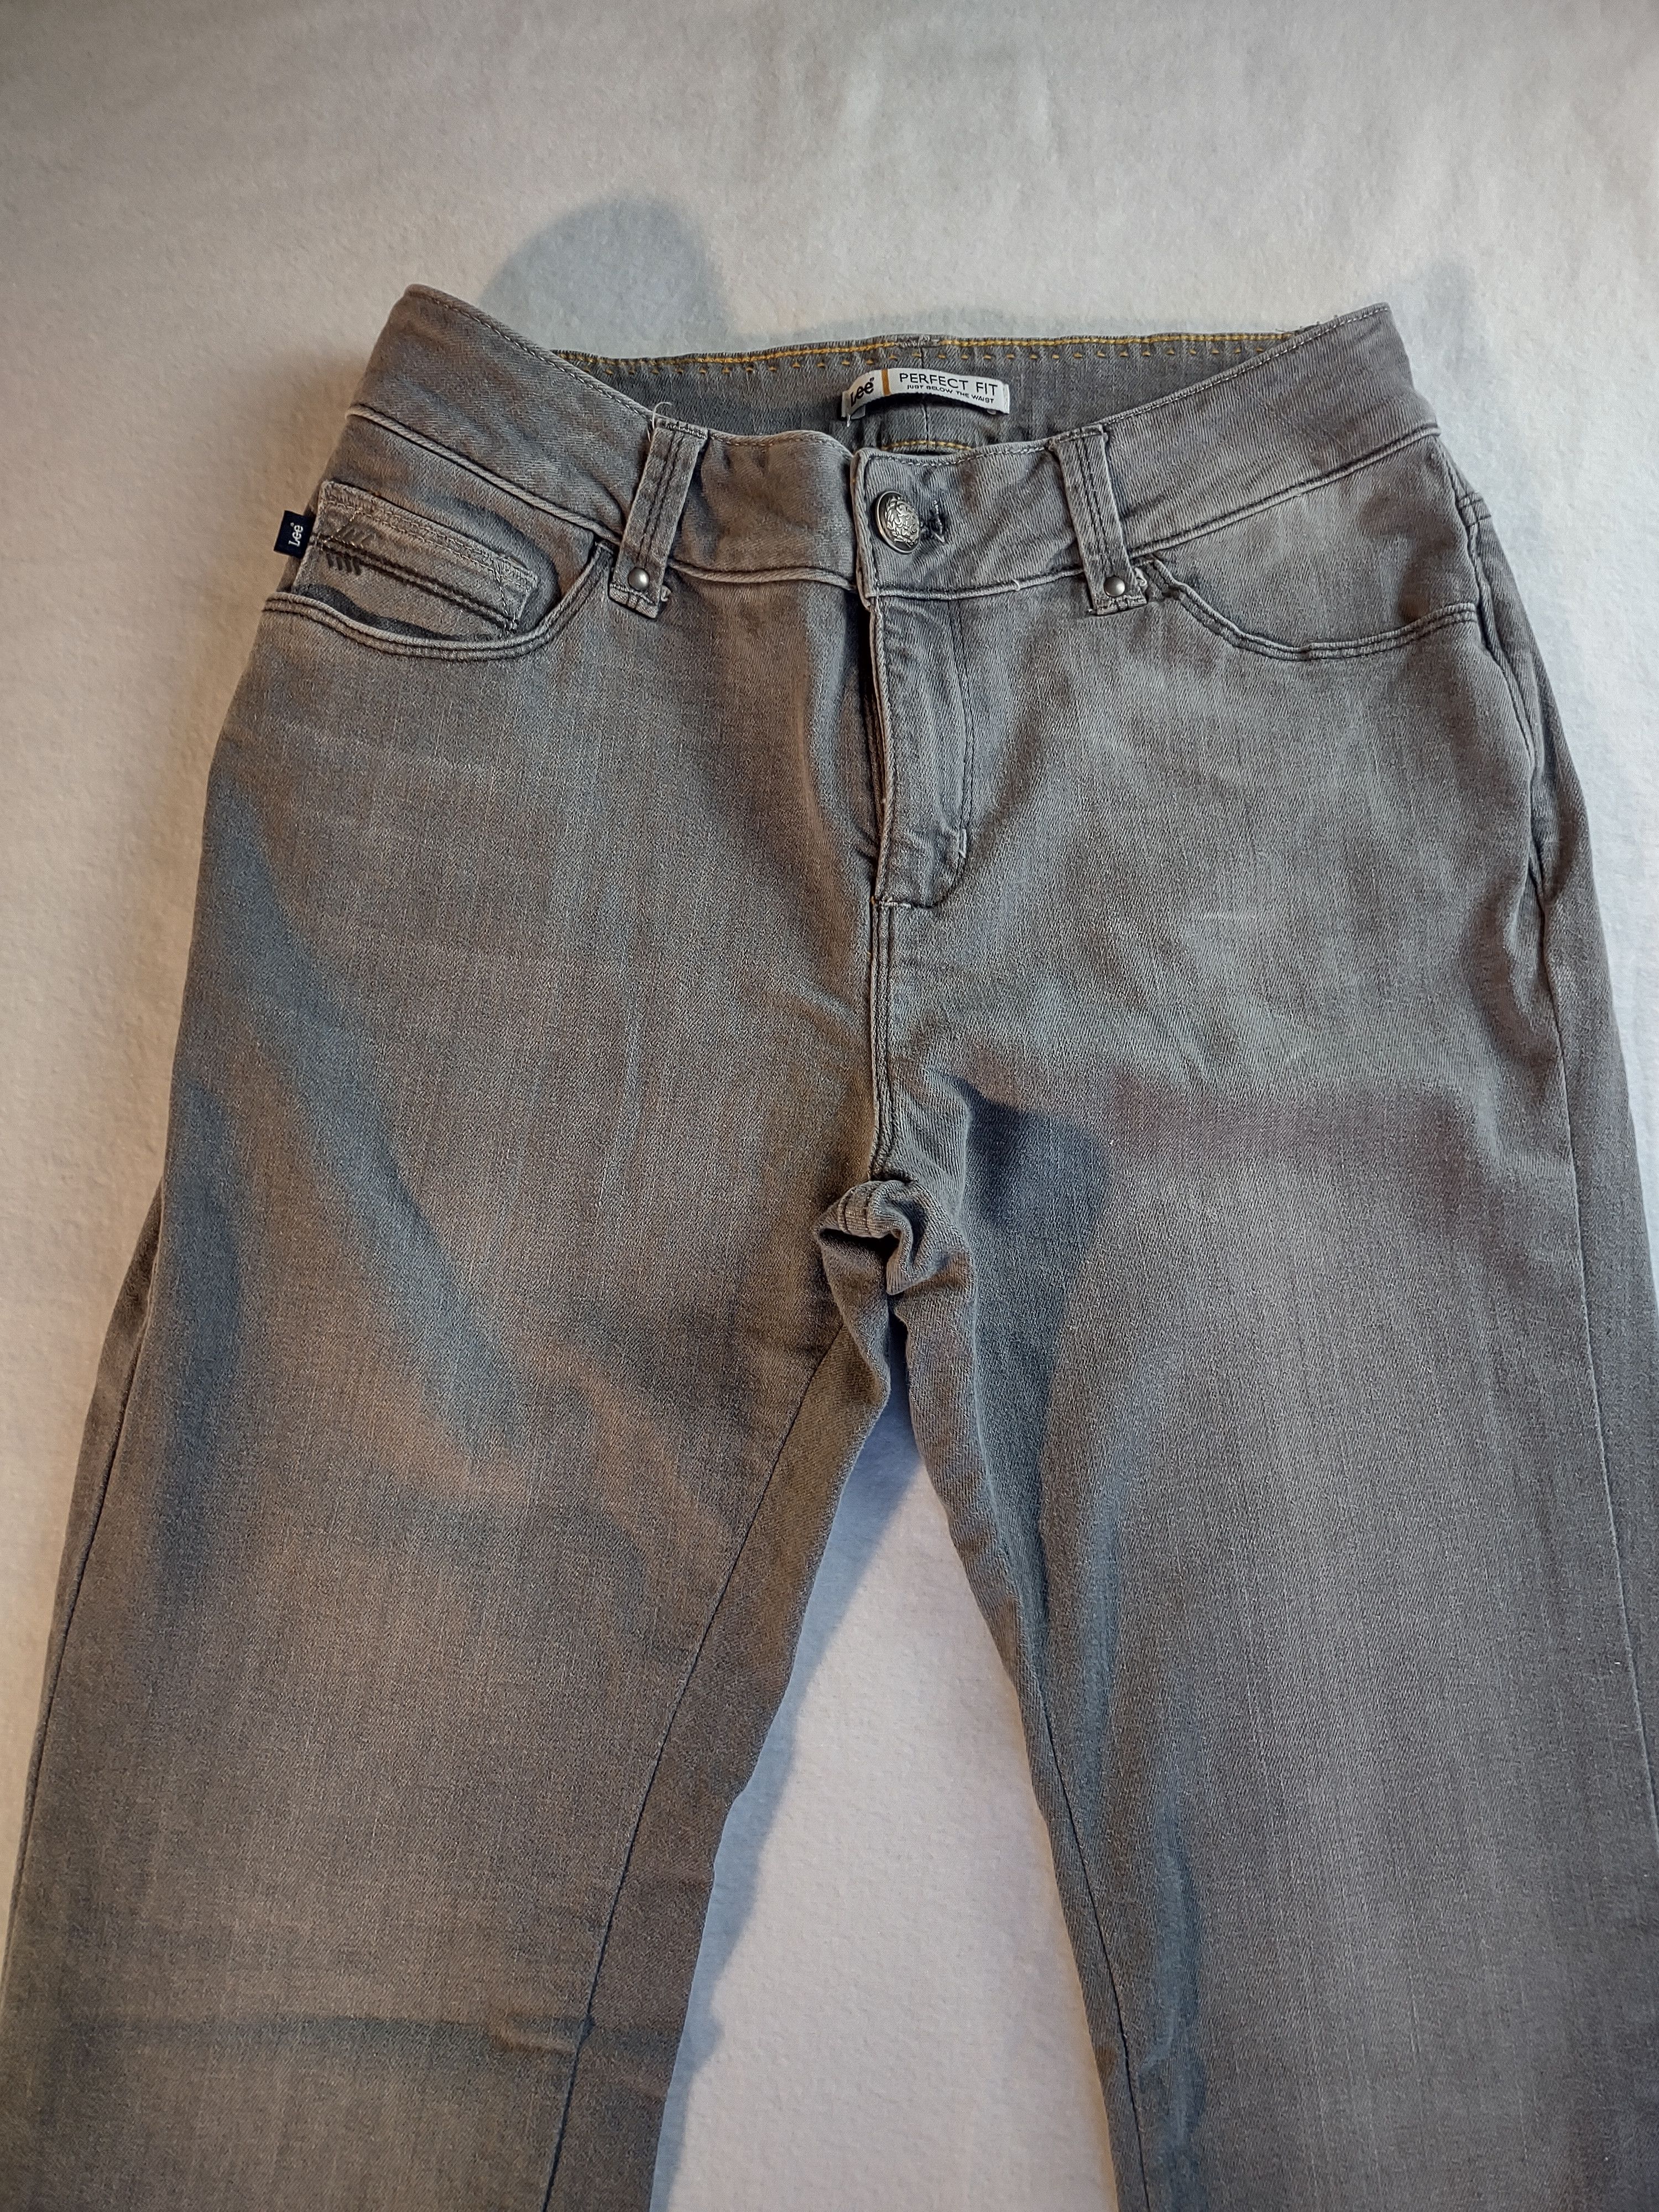 Lee Lee Perfect Fit Just Below Waist denim jeans gray ash wash Size 28" / US 6 / IT 42 - 12 Thumbnail